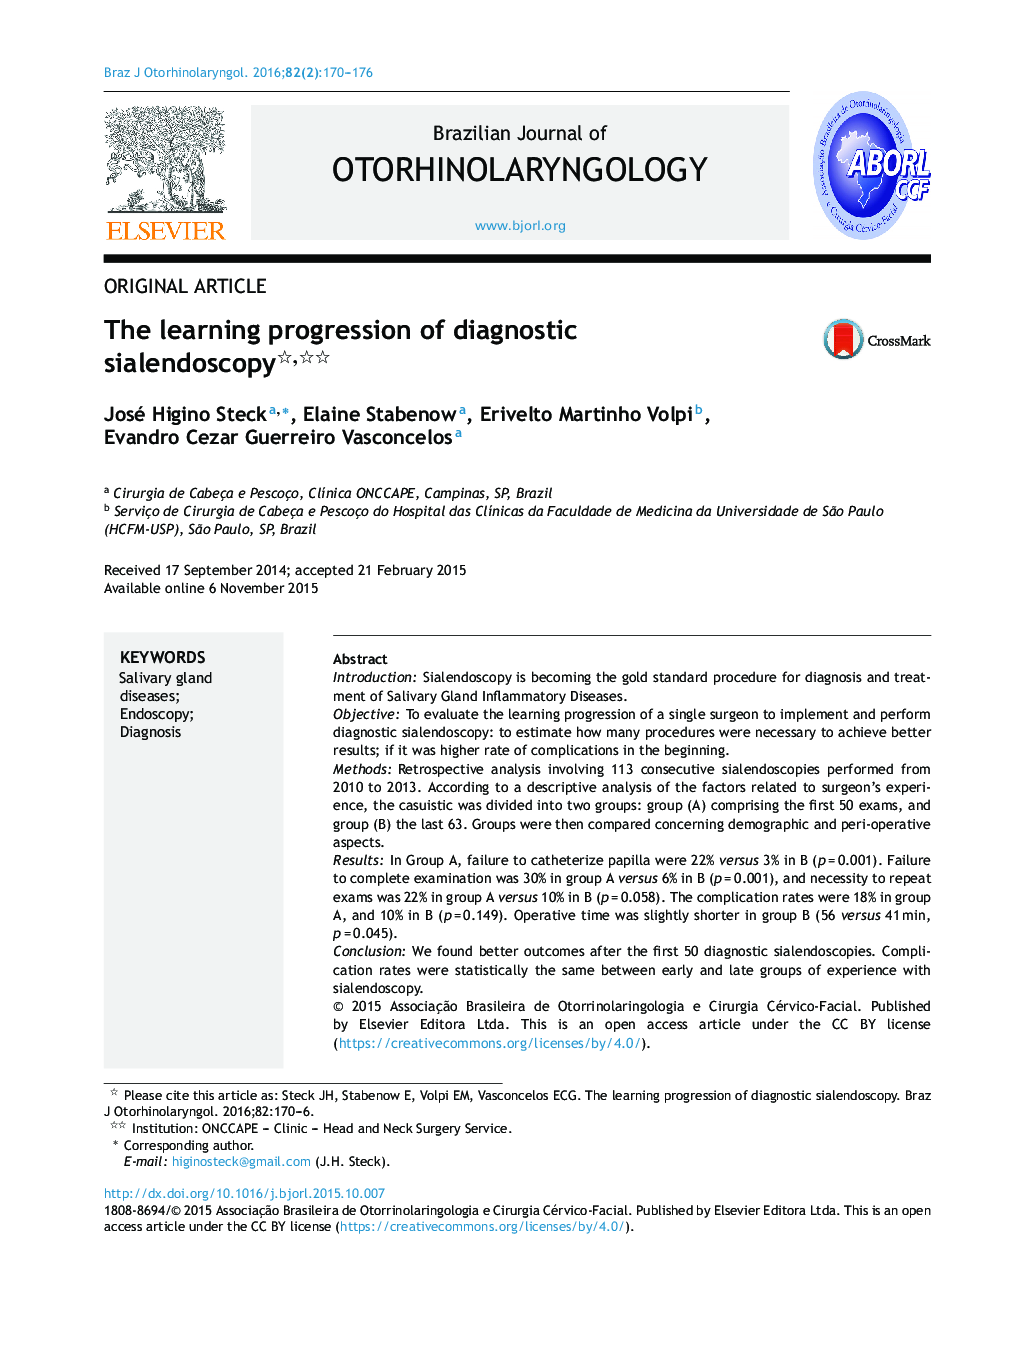 The learning progression of diagnostic sialendoscopy 